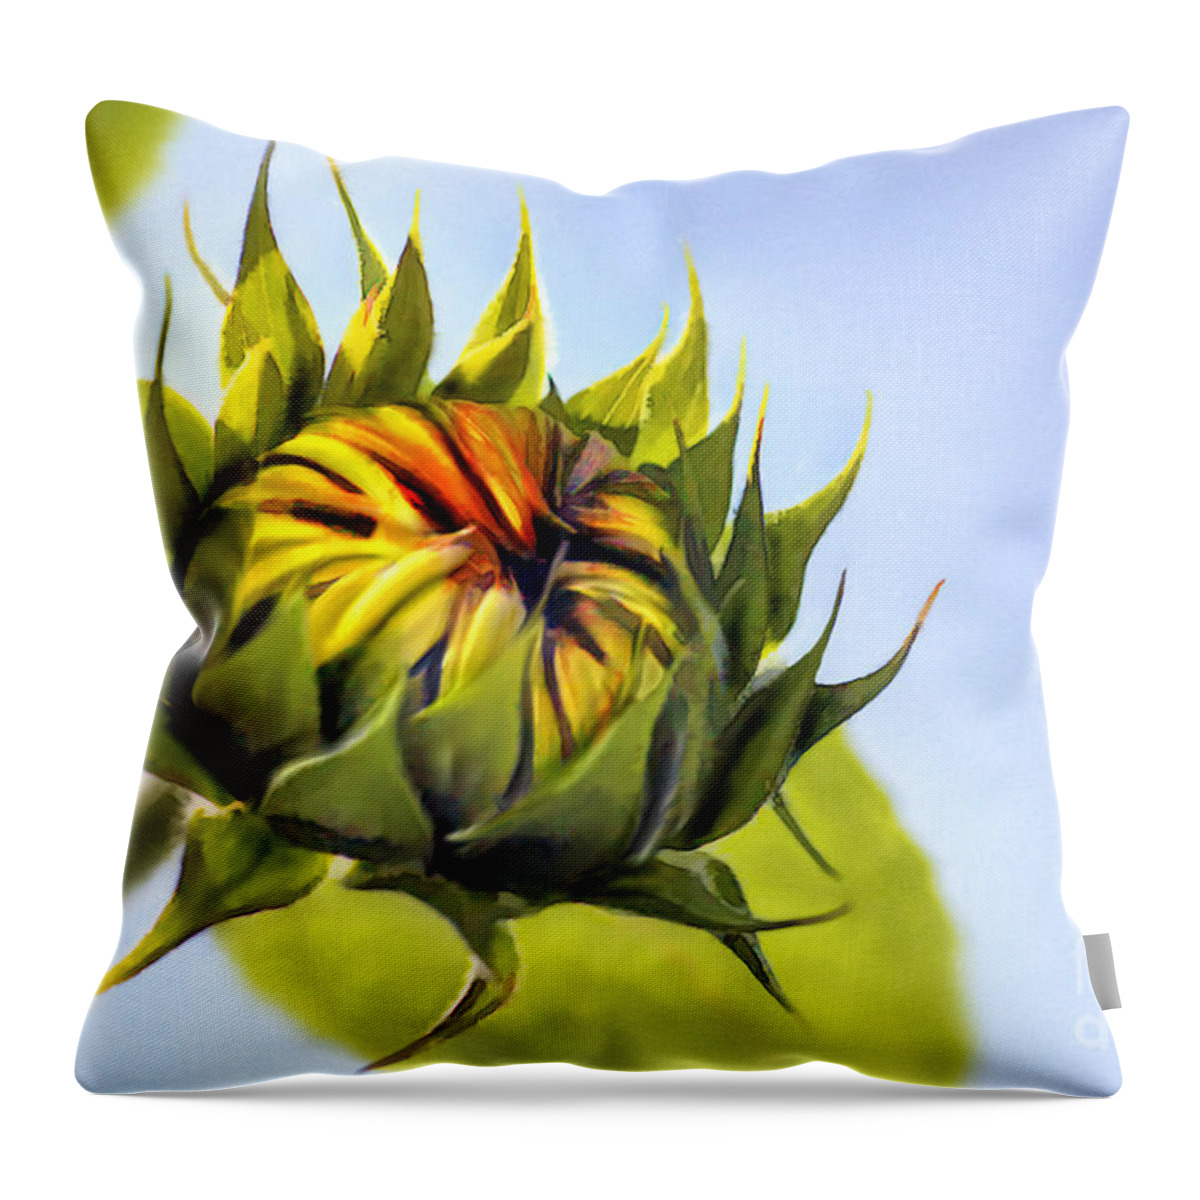 Yellow Throw Pillow featuring the digital art Sunflower bud by John Edwards